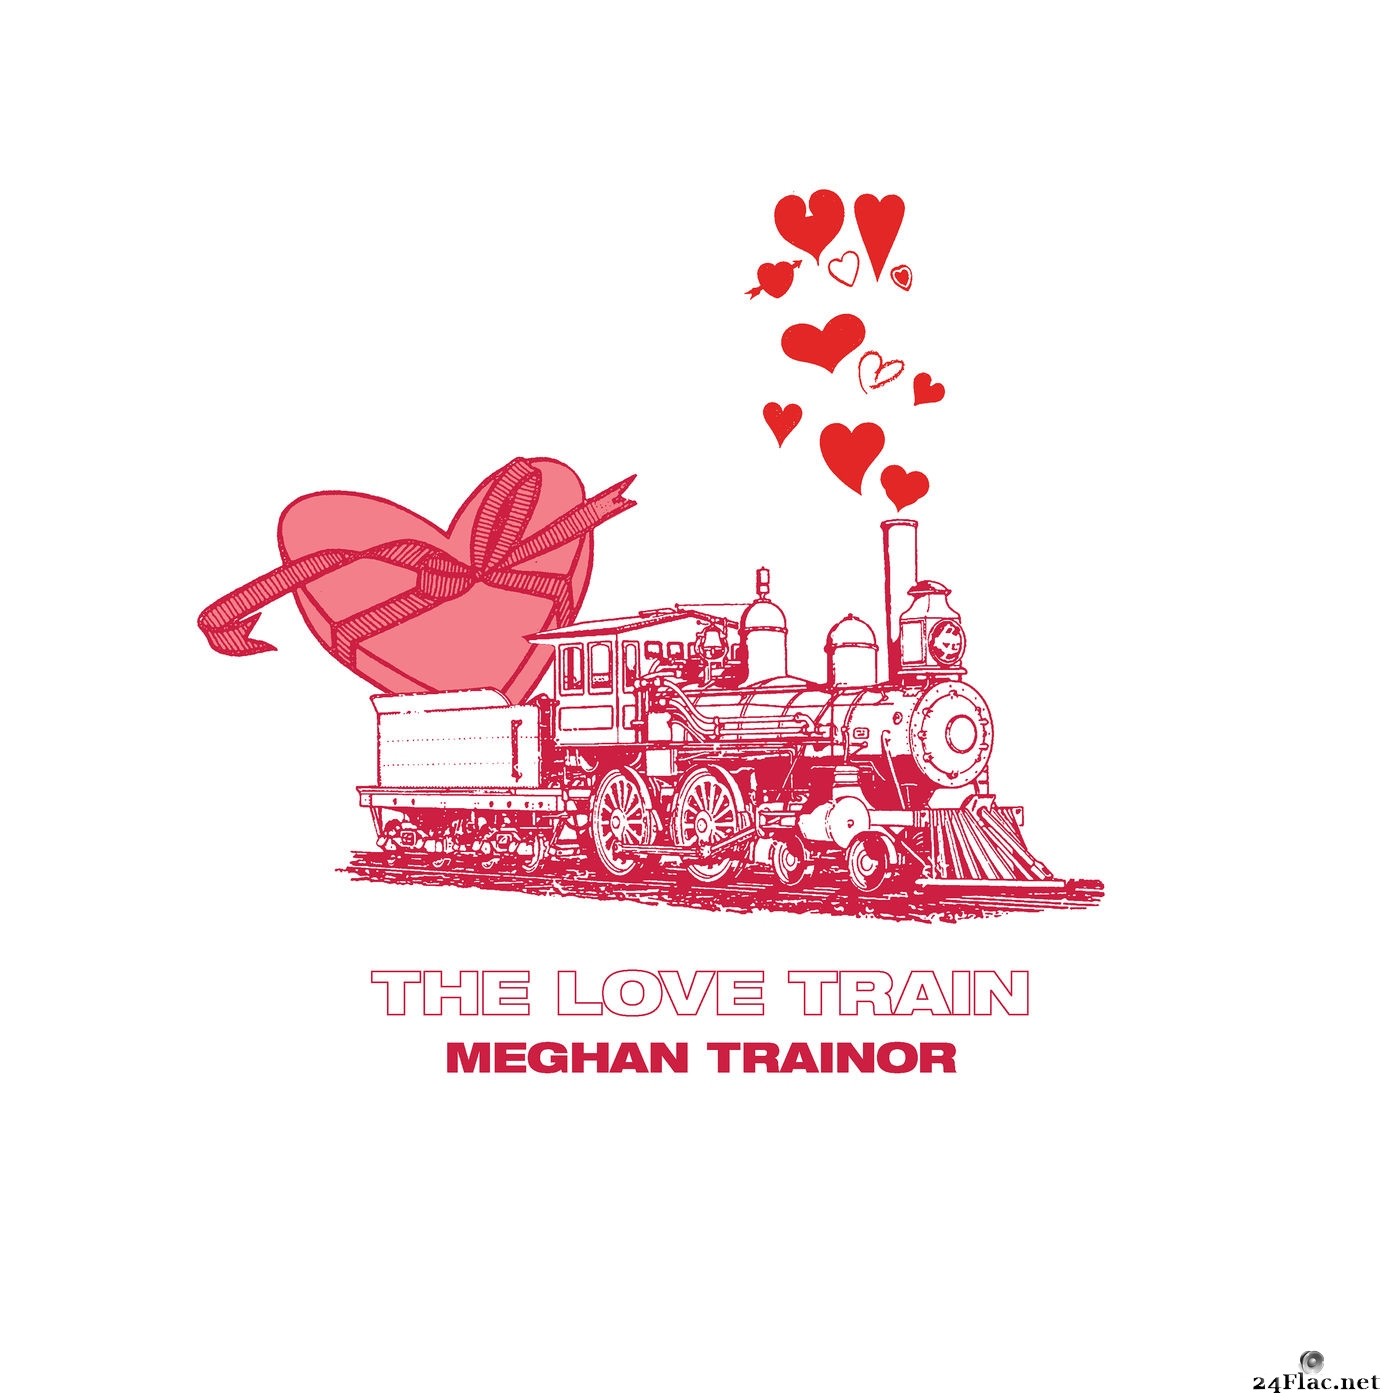 Meghan Trainor - The Love Train (2021) Hi-Res